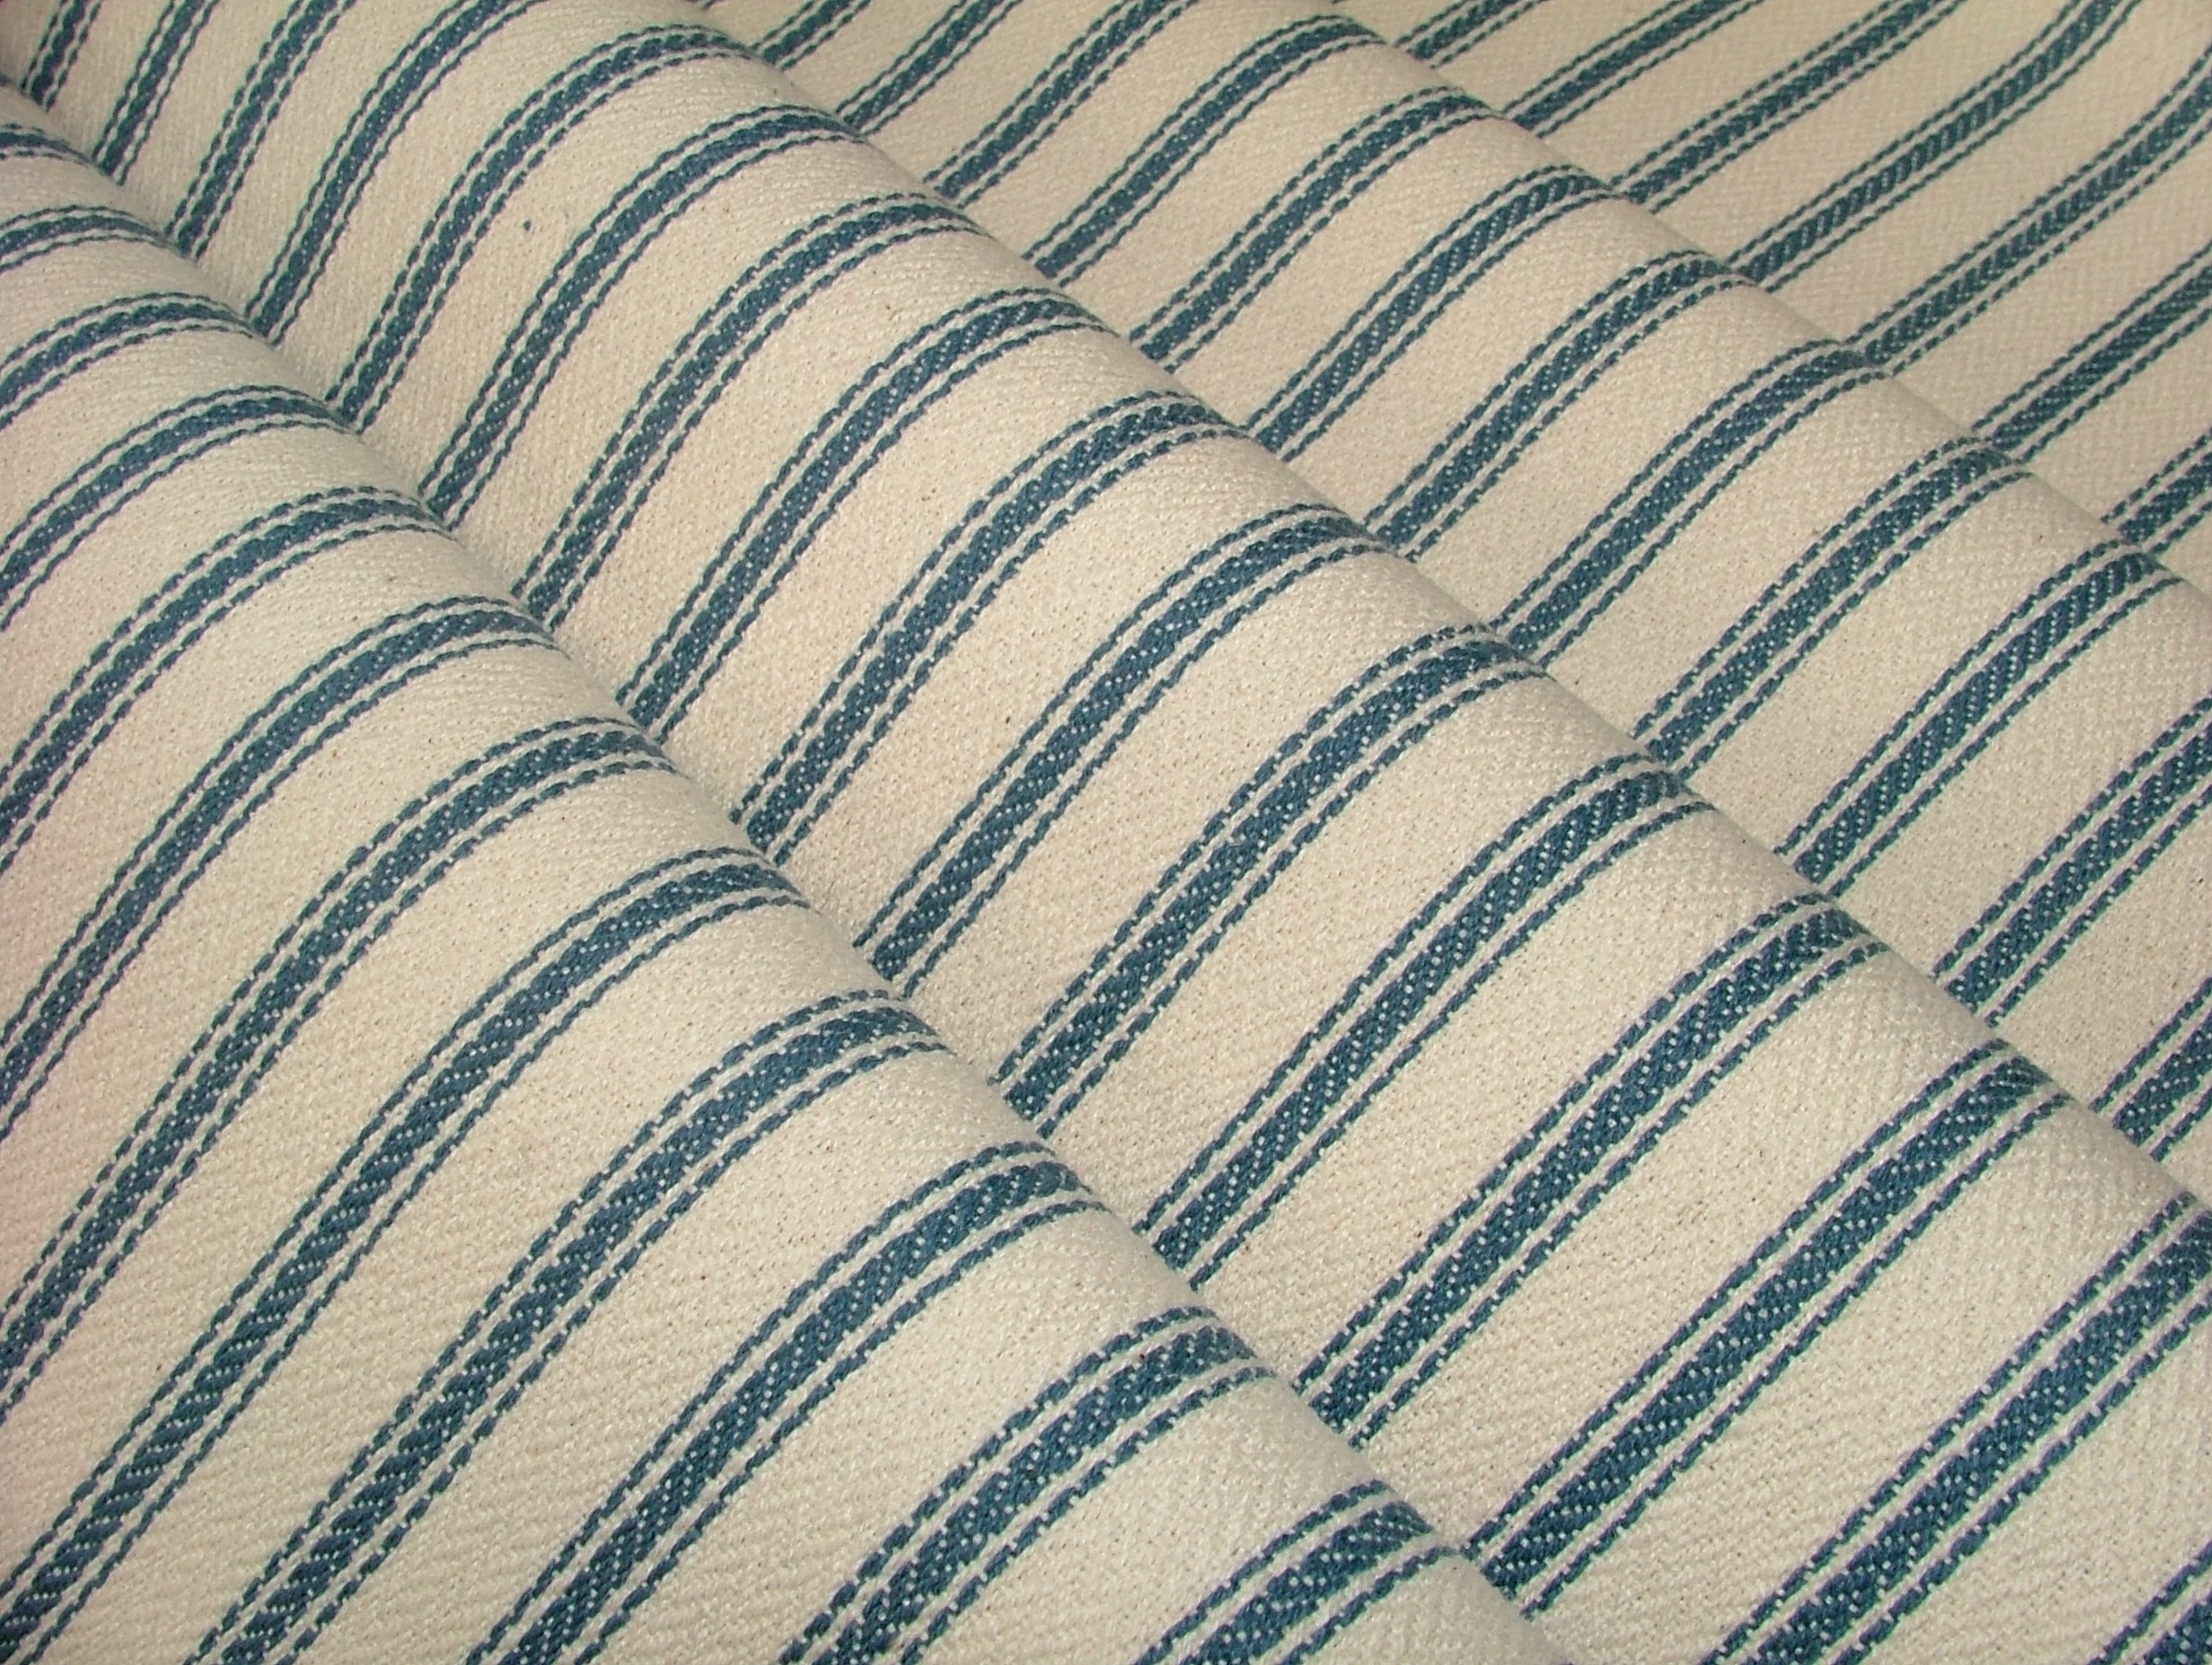 Ticking Fabric, Slow Stitch Fabric, Fabric Bundle, Stripe Fabric, 4 Pieces.  